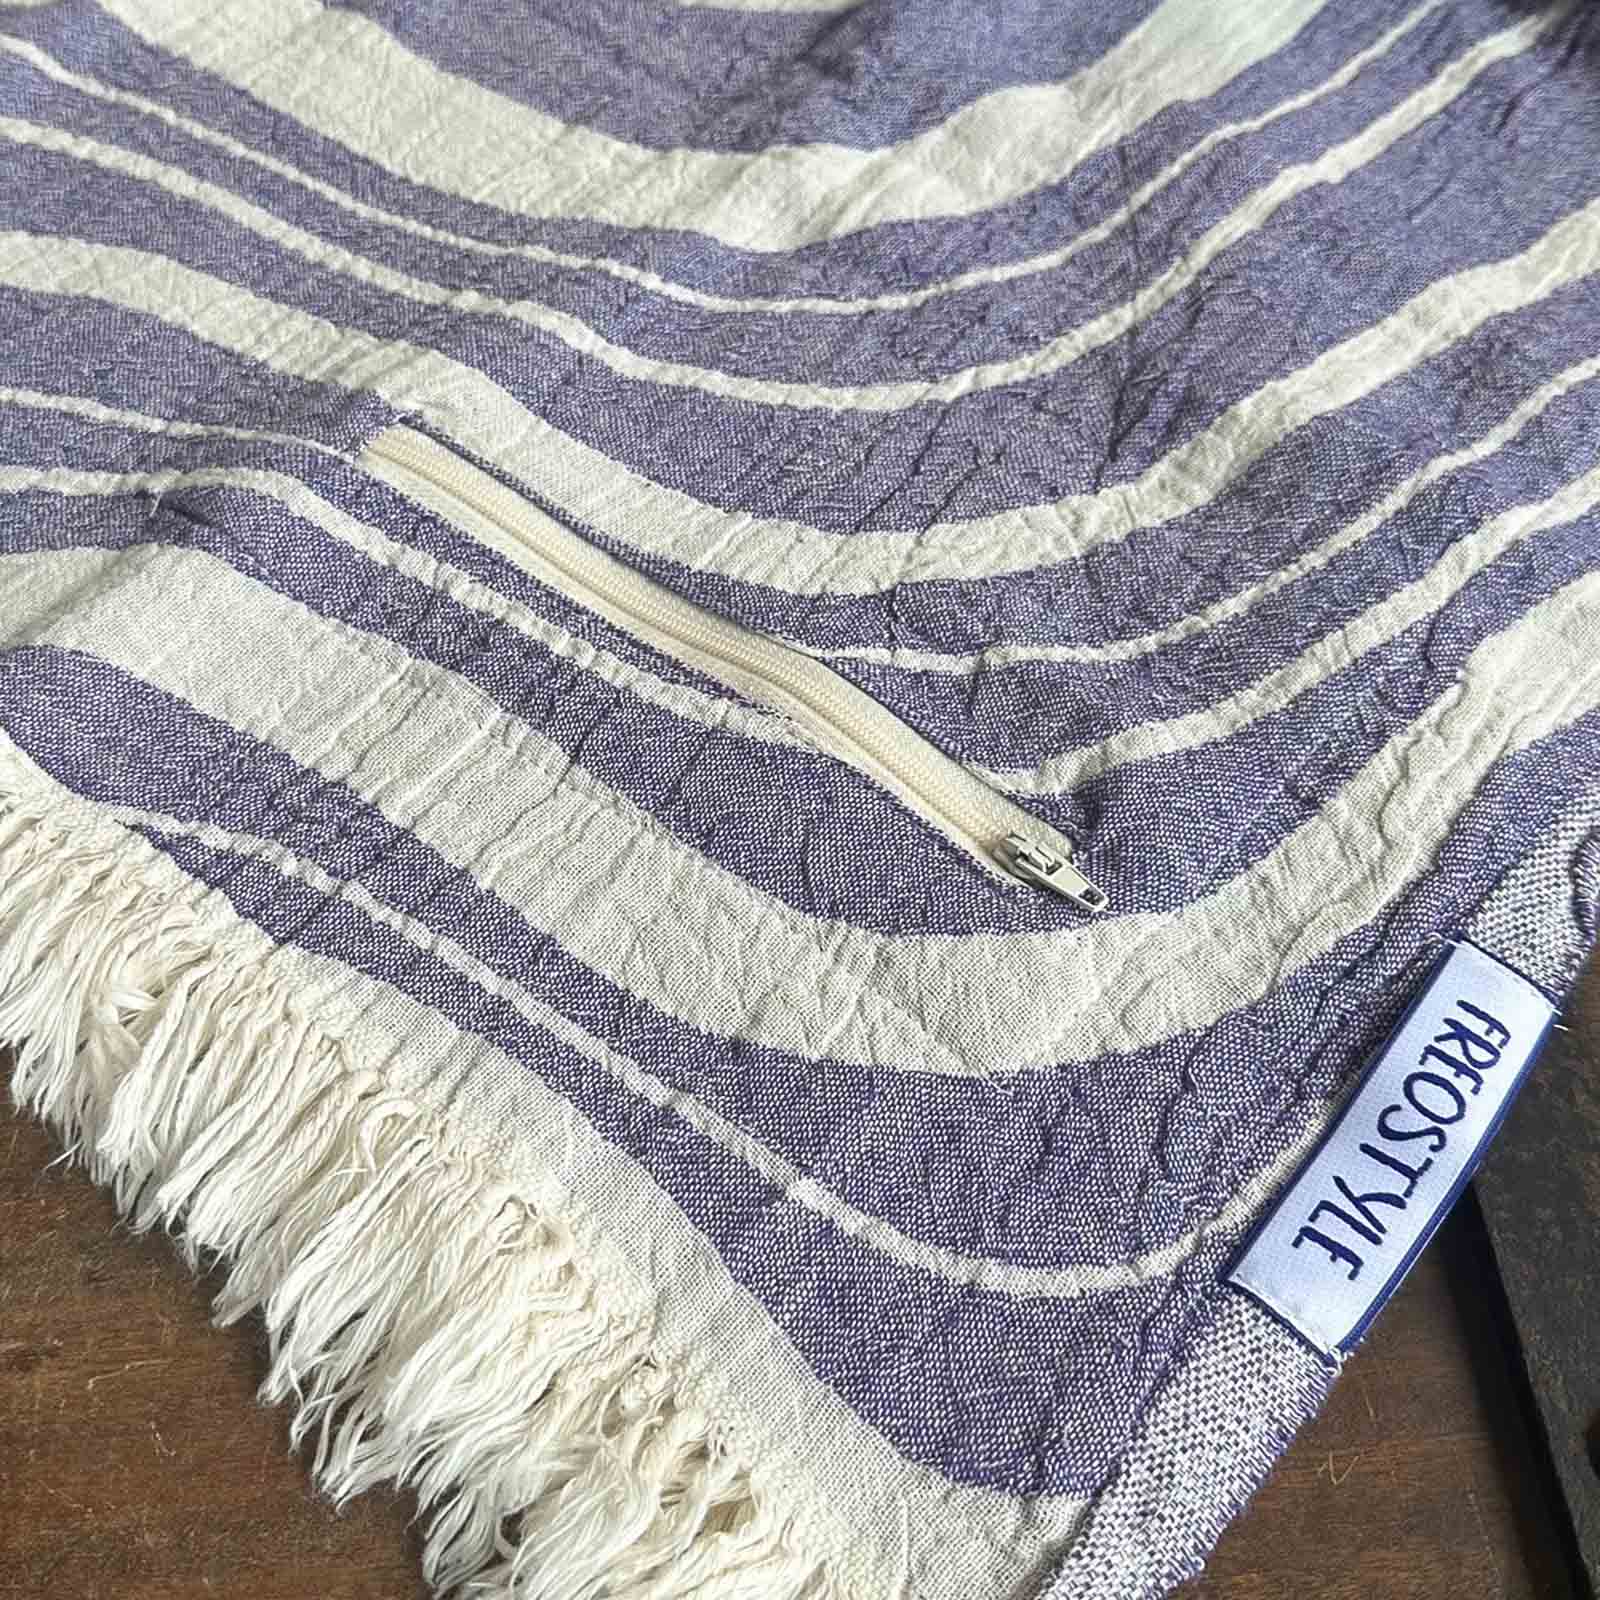 Purple Haze Turkish Towel with Pockets, by Freostyle